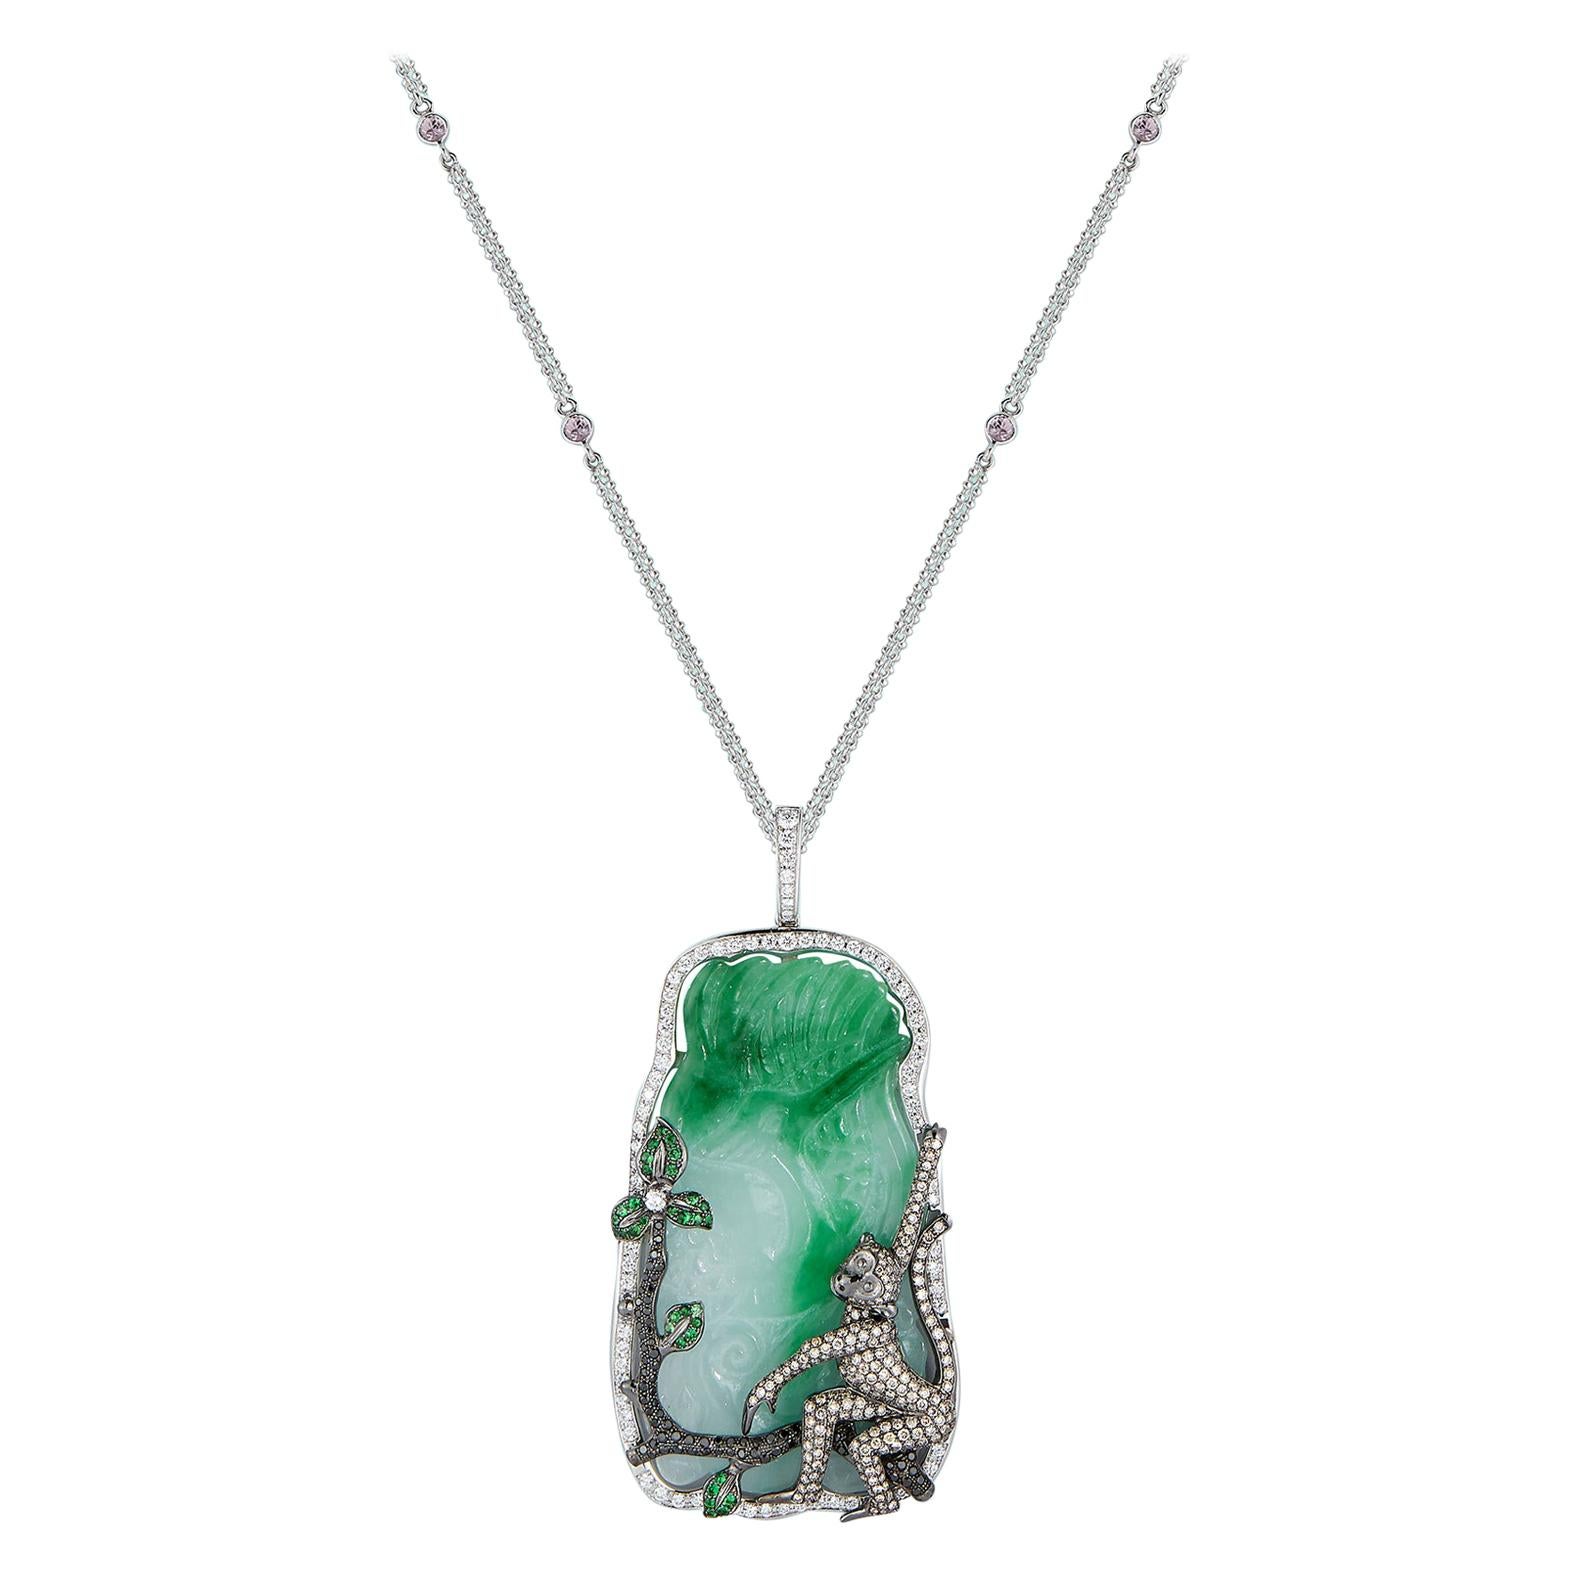 18 Karat White Gold Necklace with Diamond-Encrusted Monkey on Jade Pendant